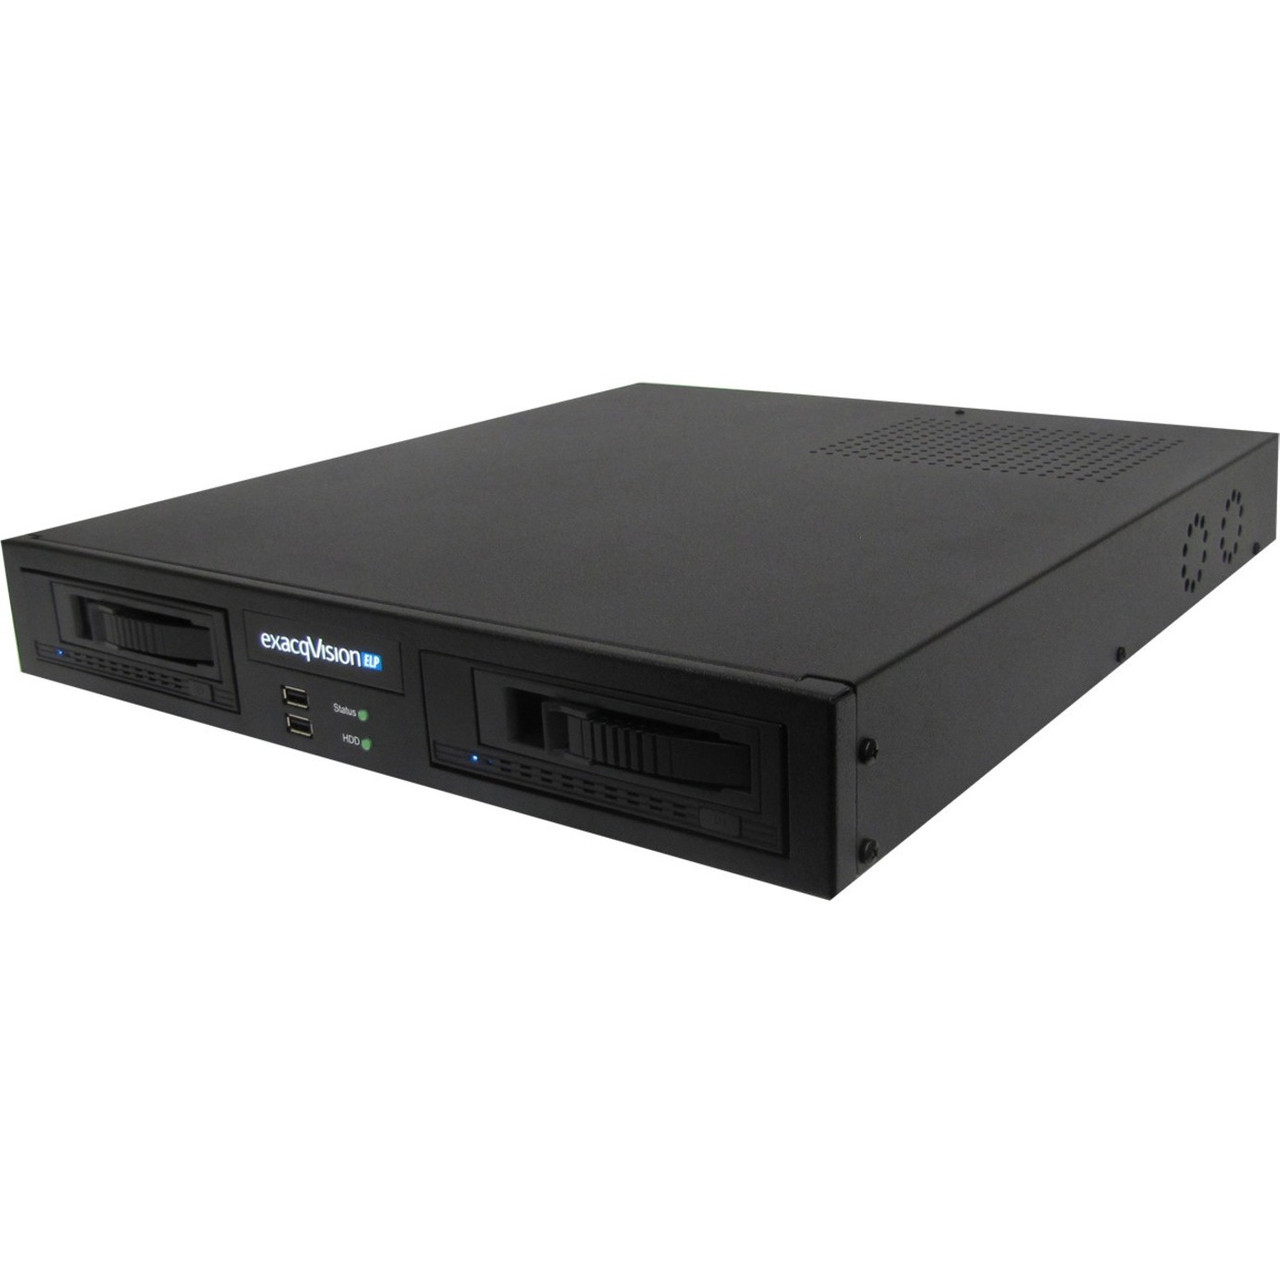 Exacq exaqVision ELP Network Video Recorder - 6 TB HDD - IP04-06T-ELPR